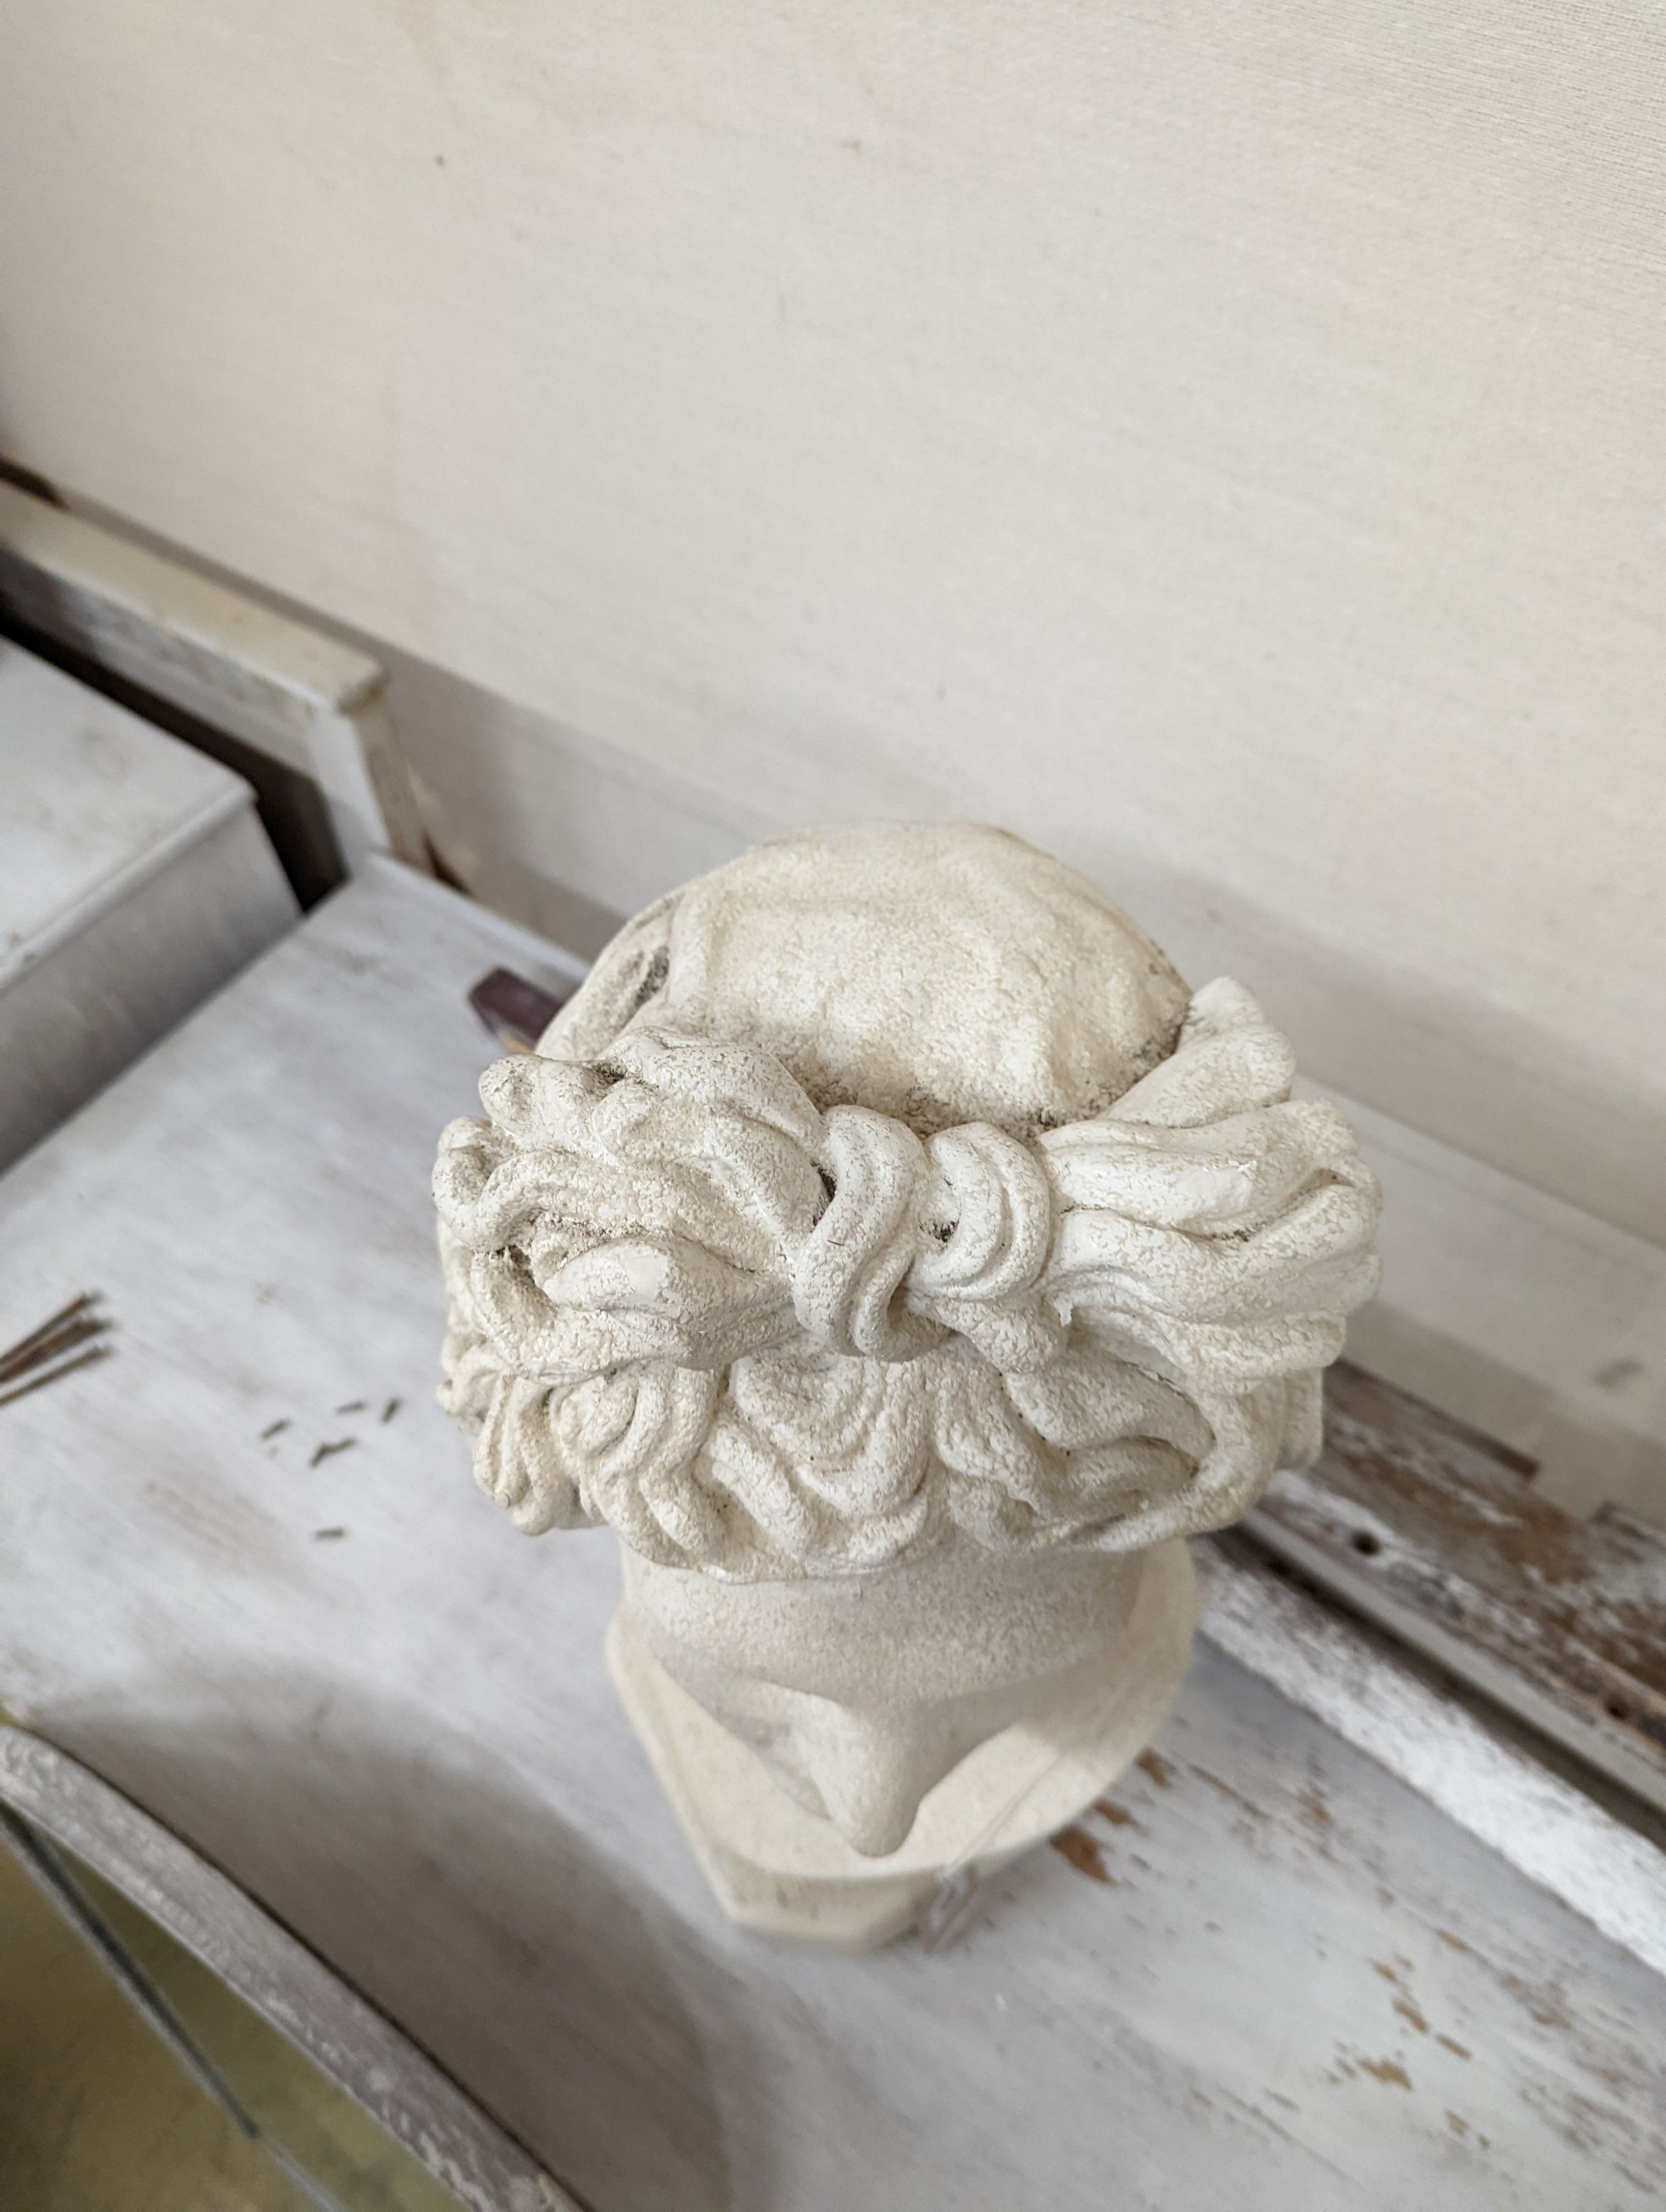 A plaster classical female bust. H-50cm.